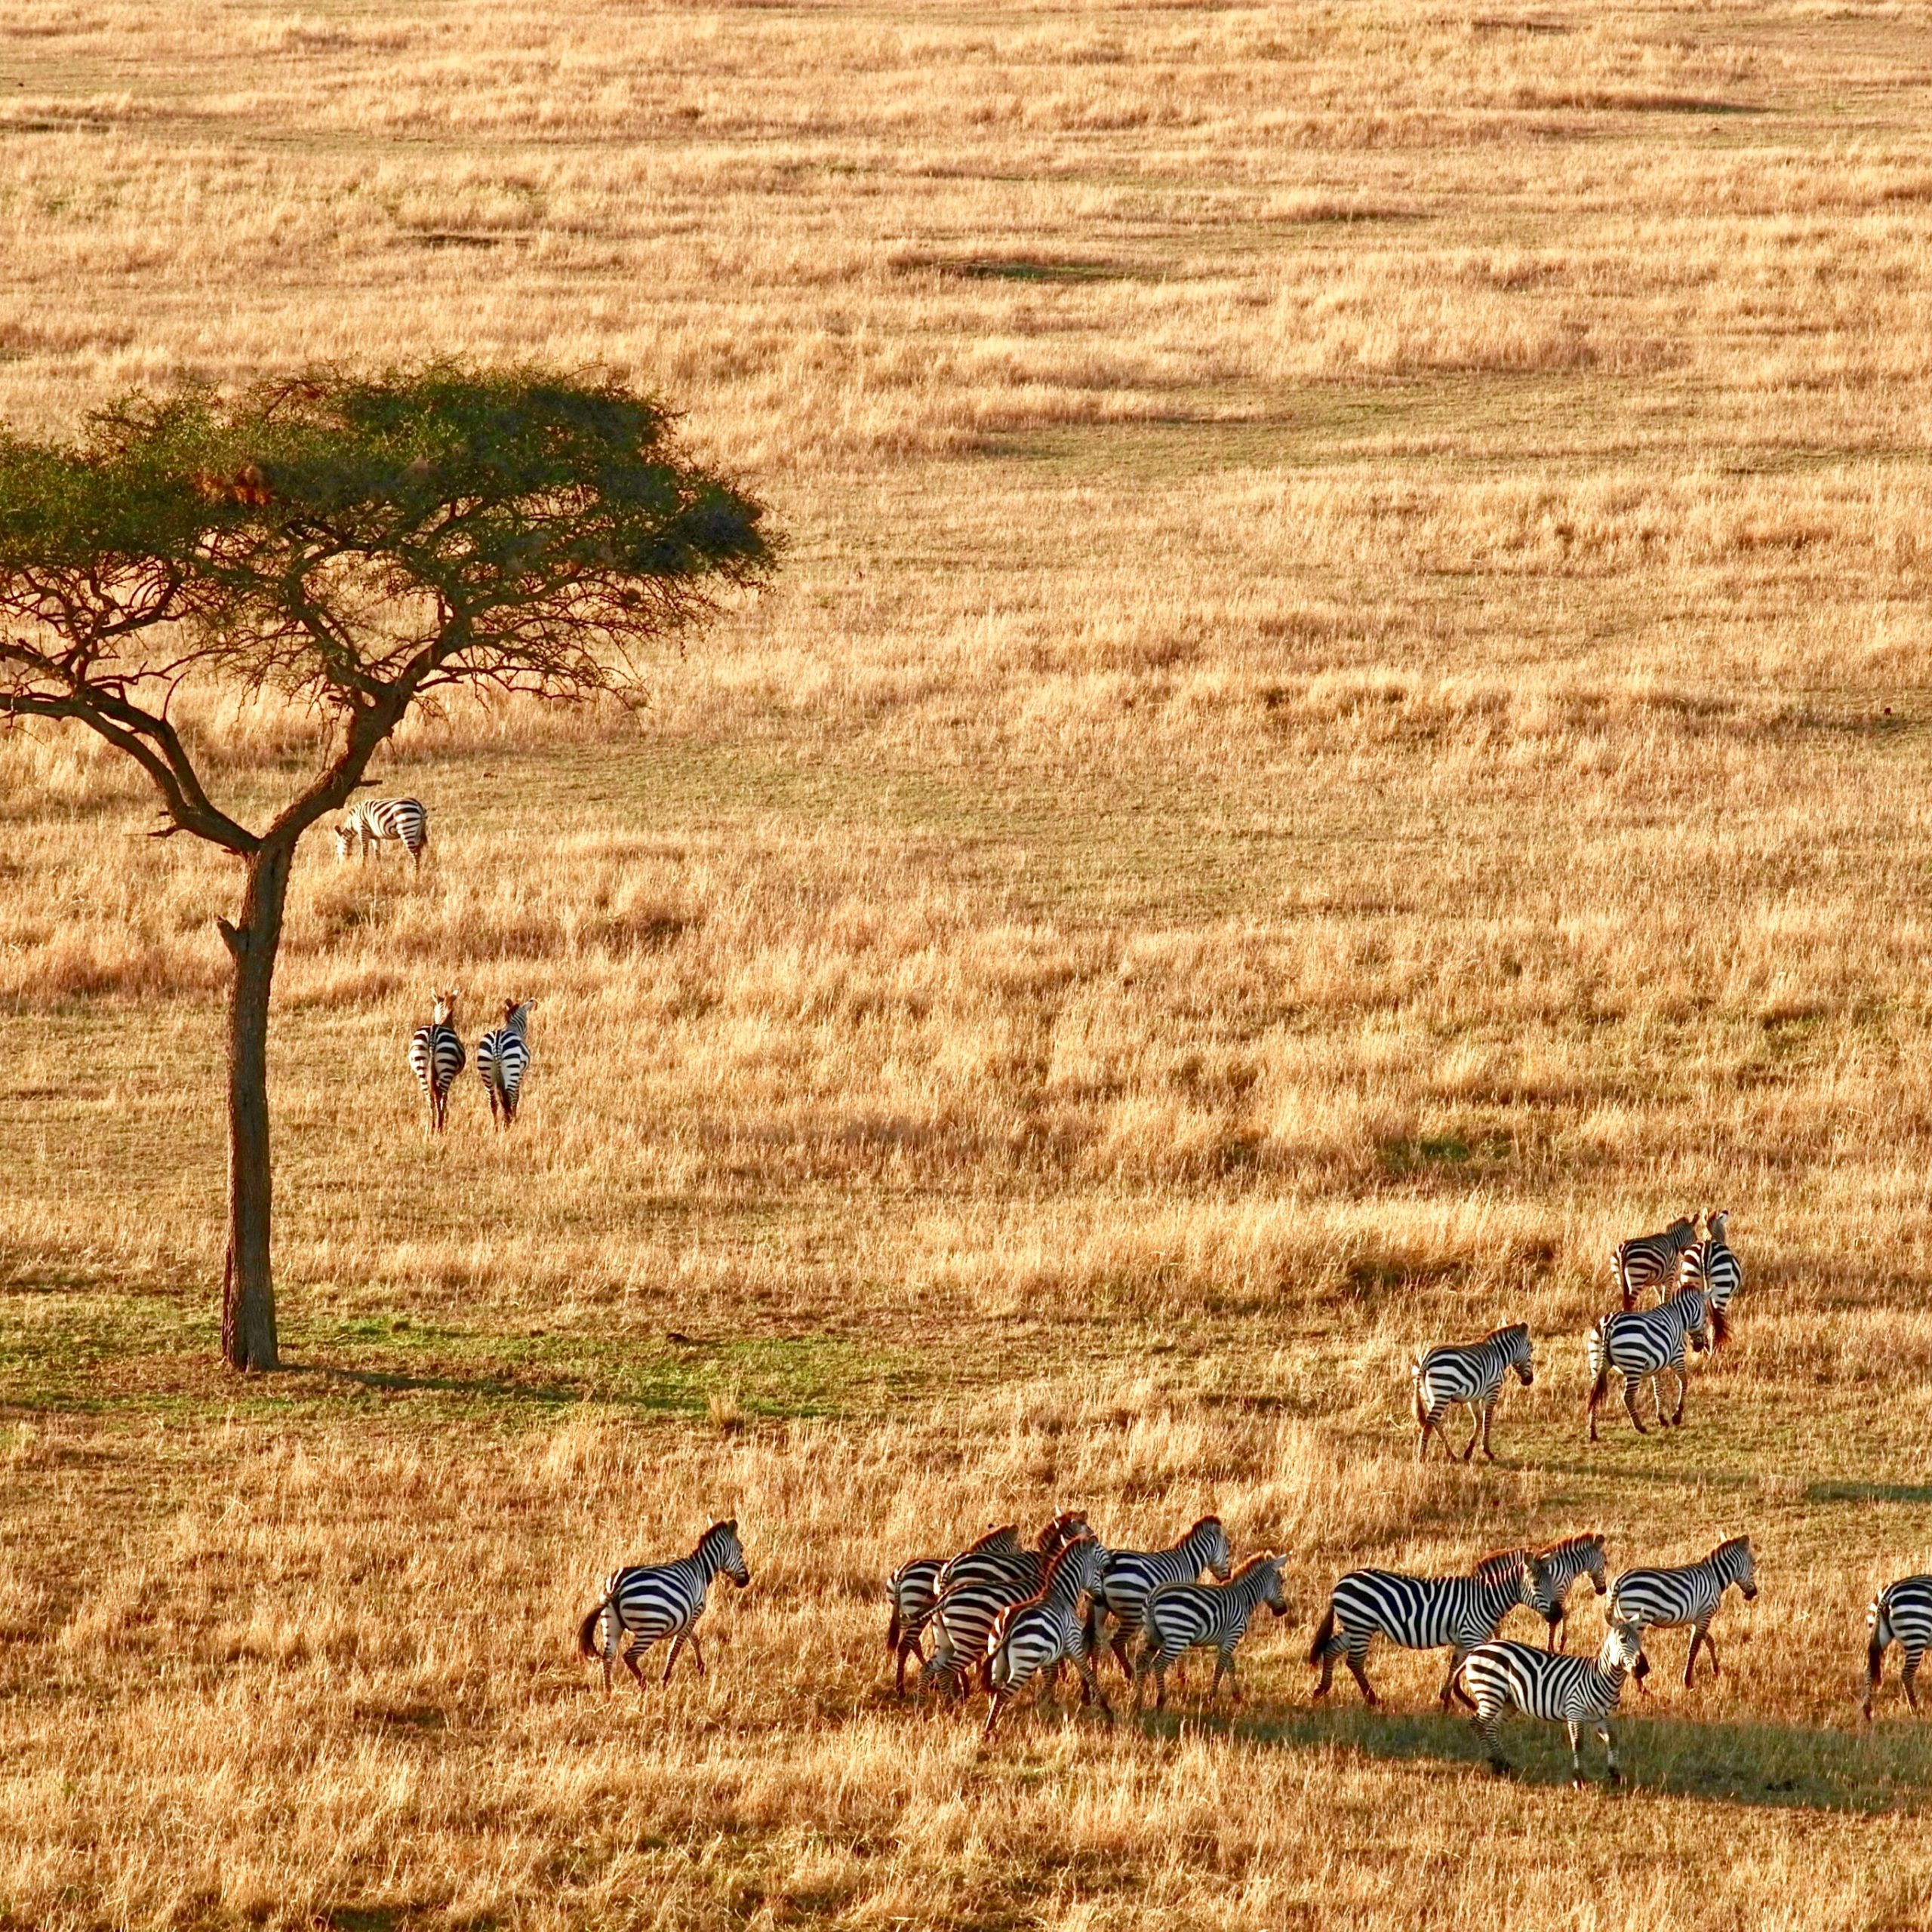 Day 6 Serengeti National Park